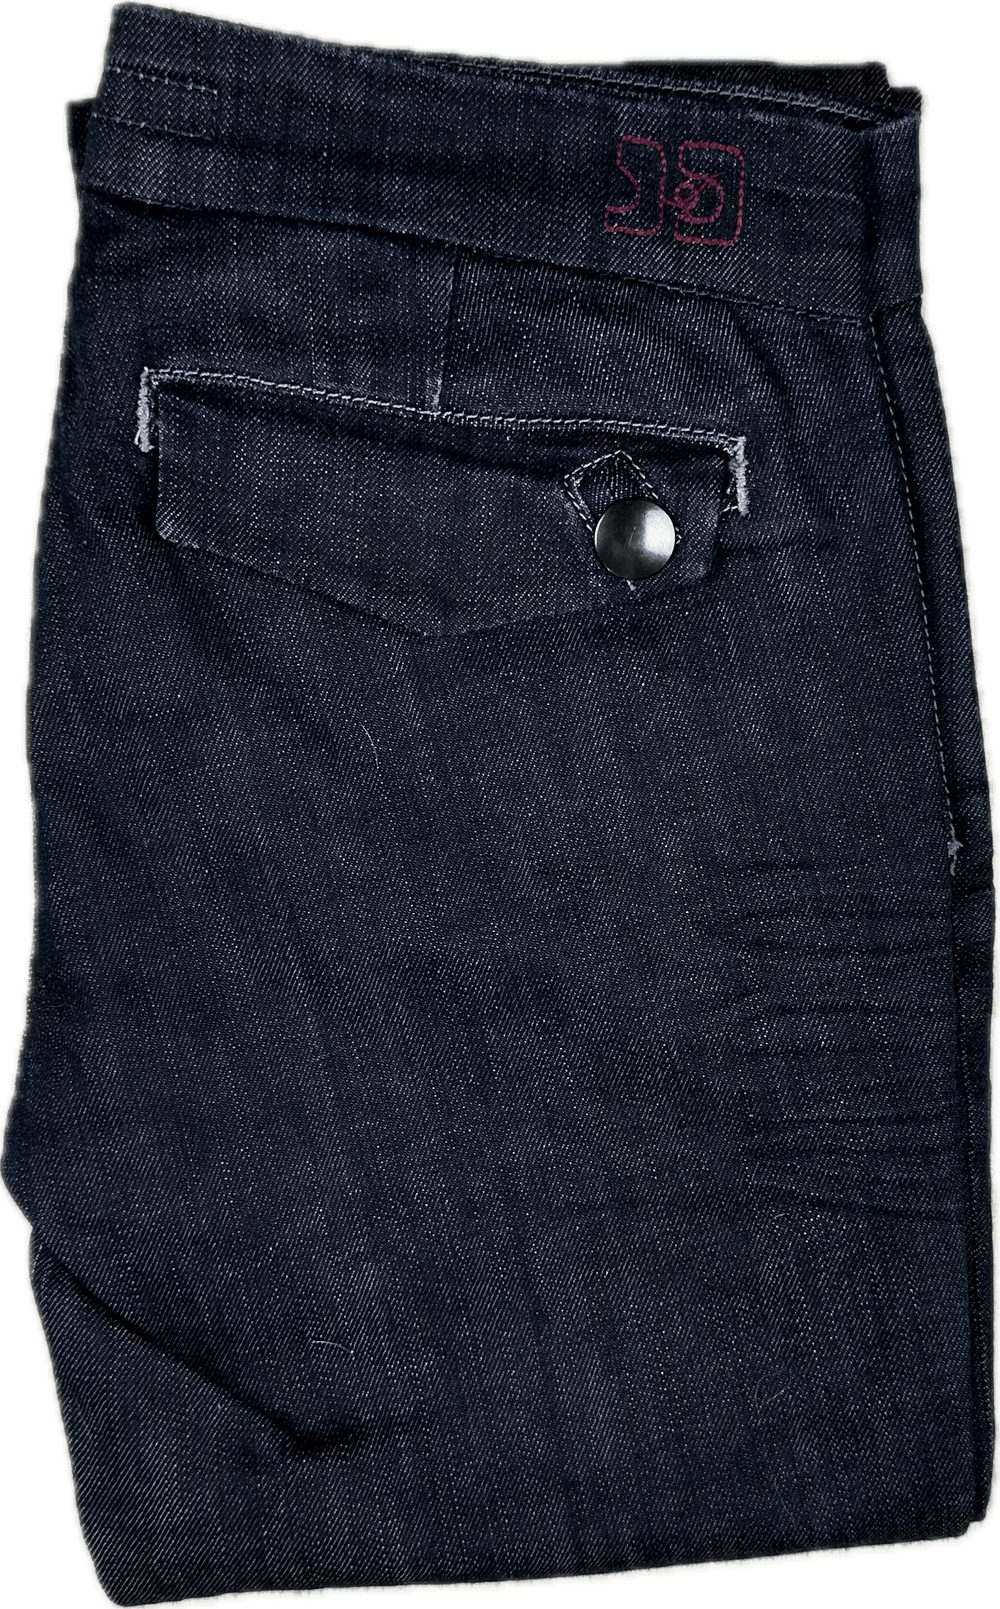 Joes Jeans USA Dark Wash Pant Cut Jeans Size- 27 - Jean Pool